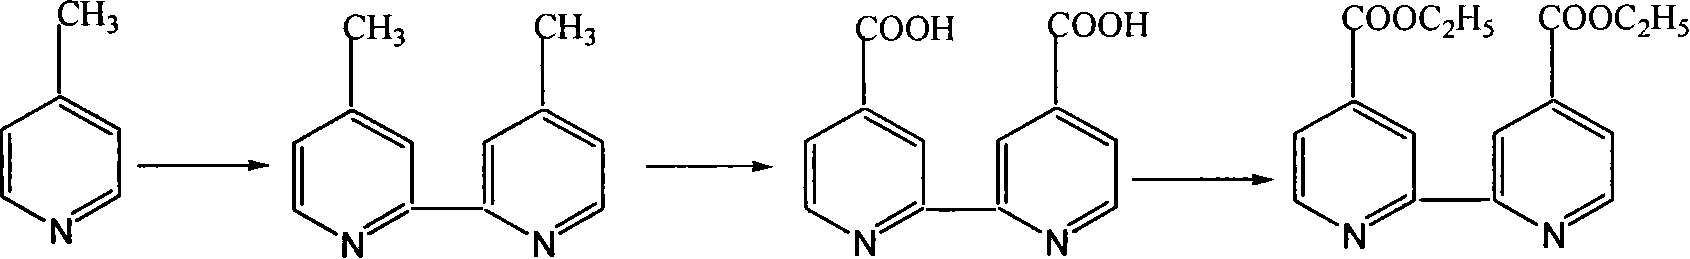 Catalyst for synthesizing polyketone by copolymerization of carbon monooxide and phenyl ethylene